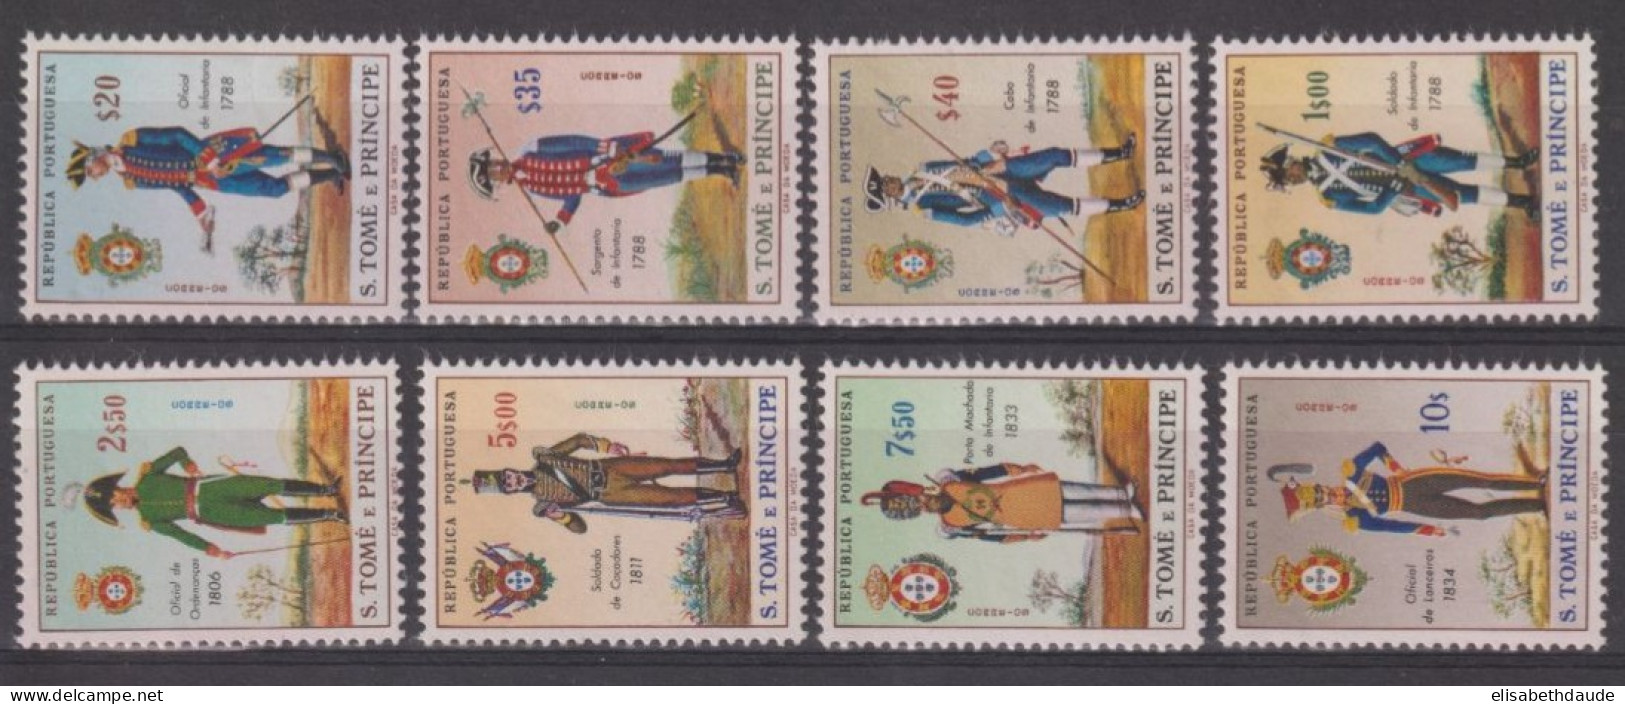 ST THOMAS ET PRINCE - 1965 - UNIFORMES MILITAIRES - SERIE YVERT N°391/398 ** MNH - Sao Tome And Principe